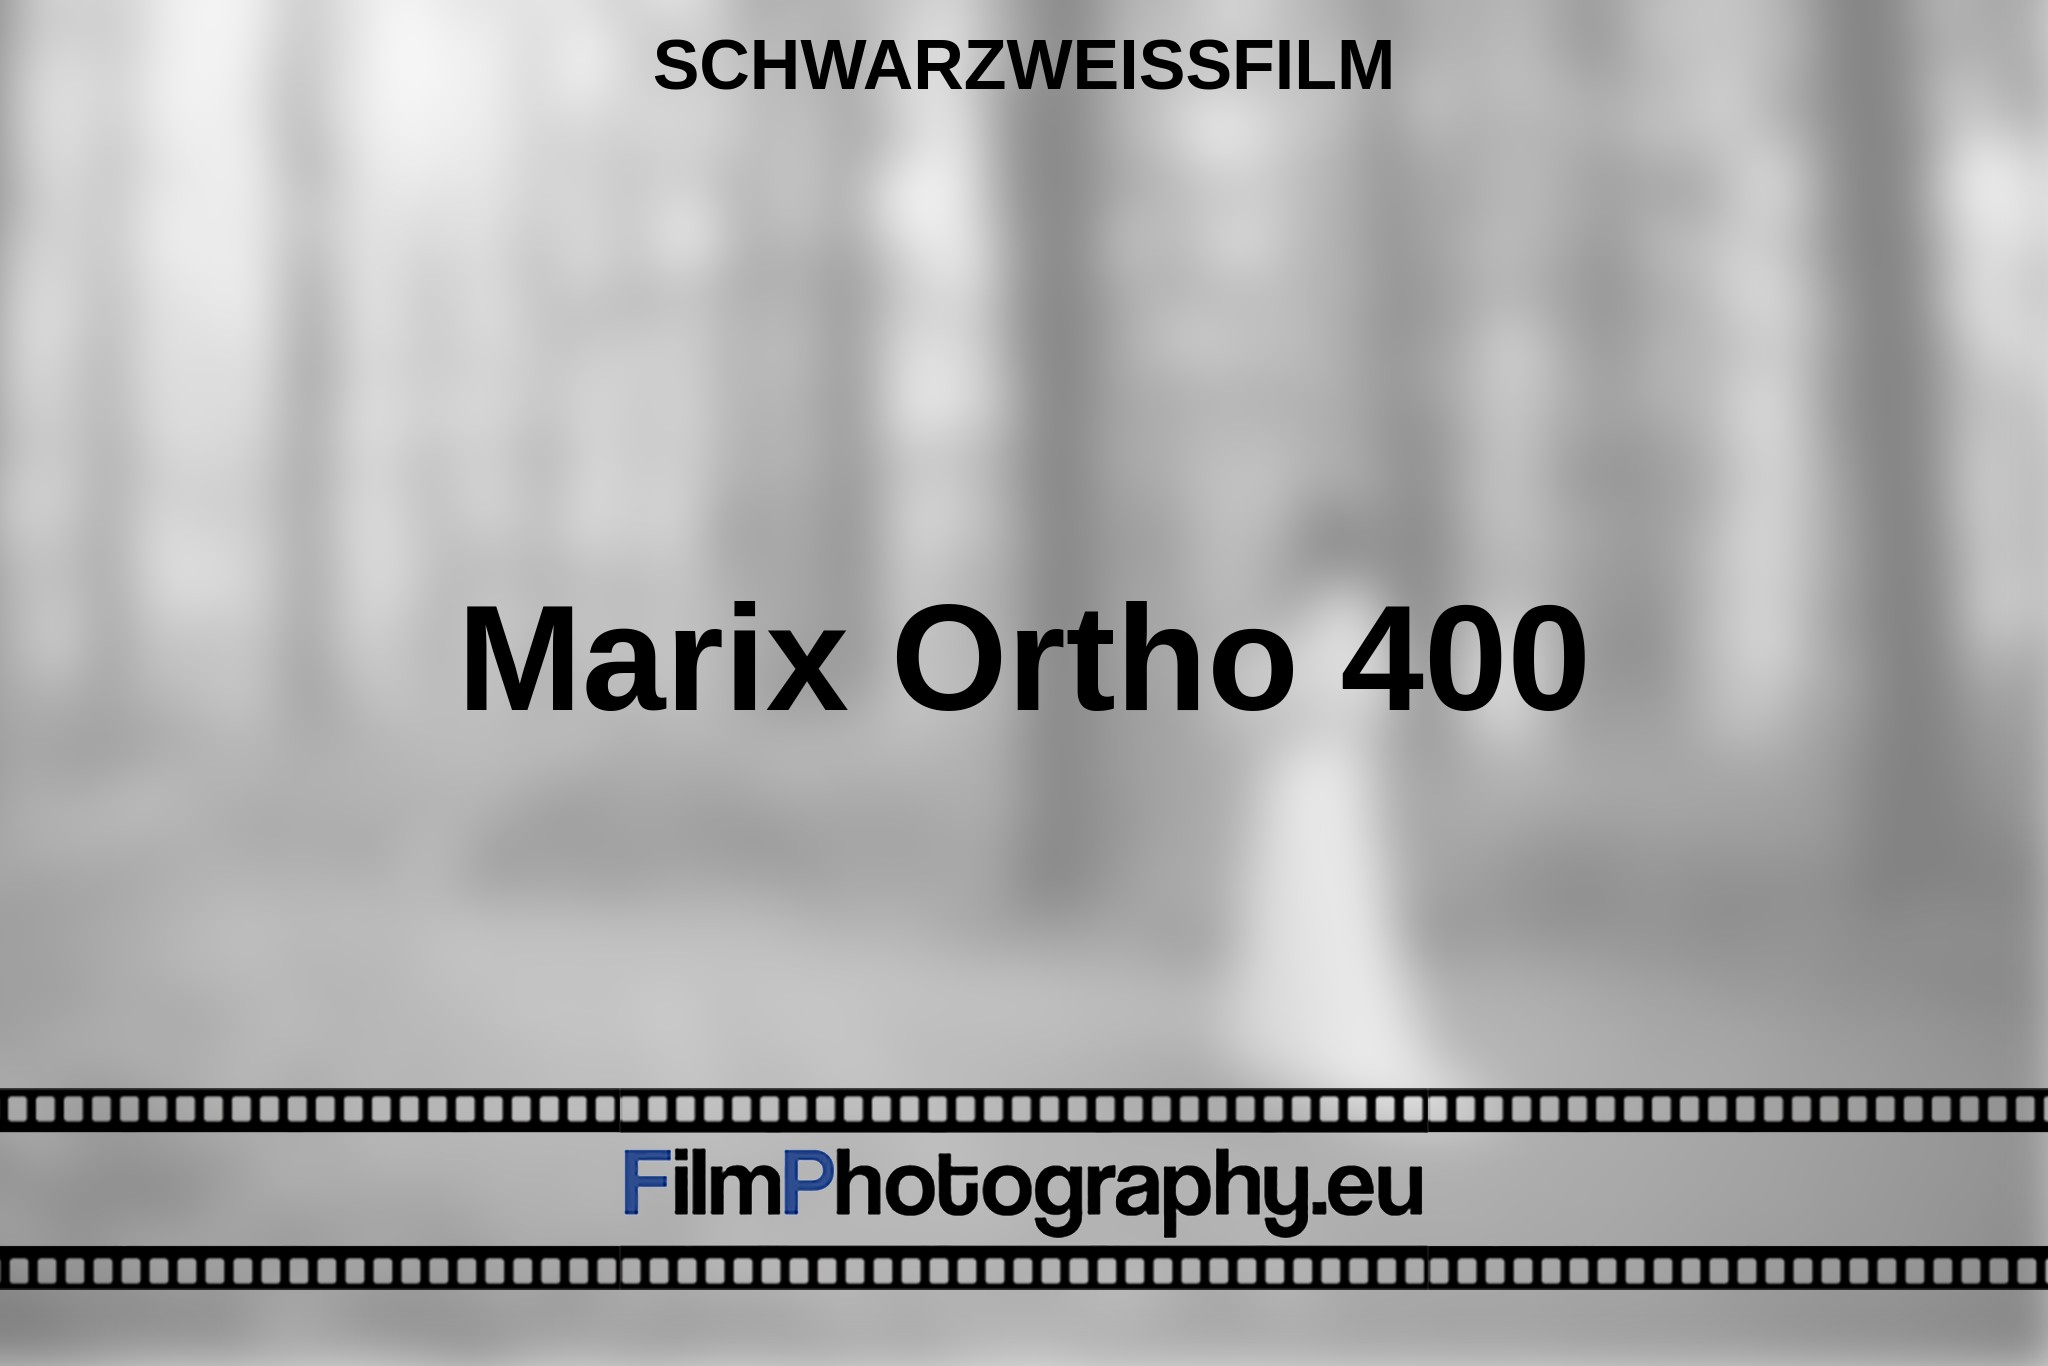 marix-ortho-400-schwarzweißfilm-bnv.jpg